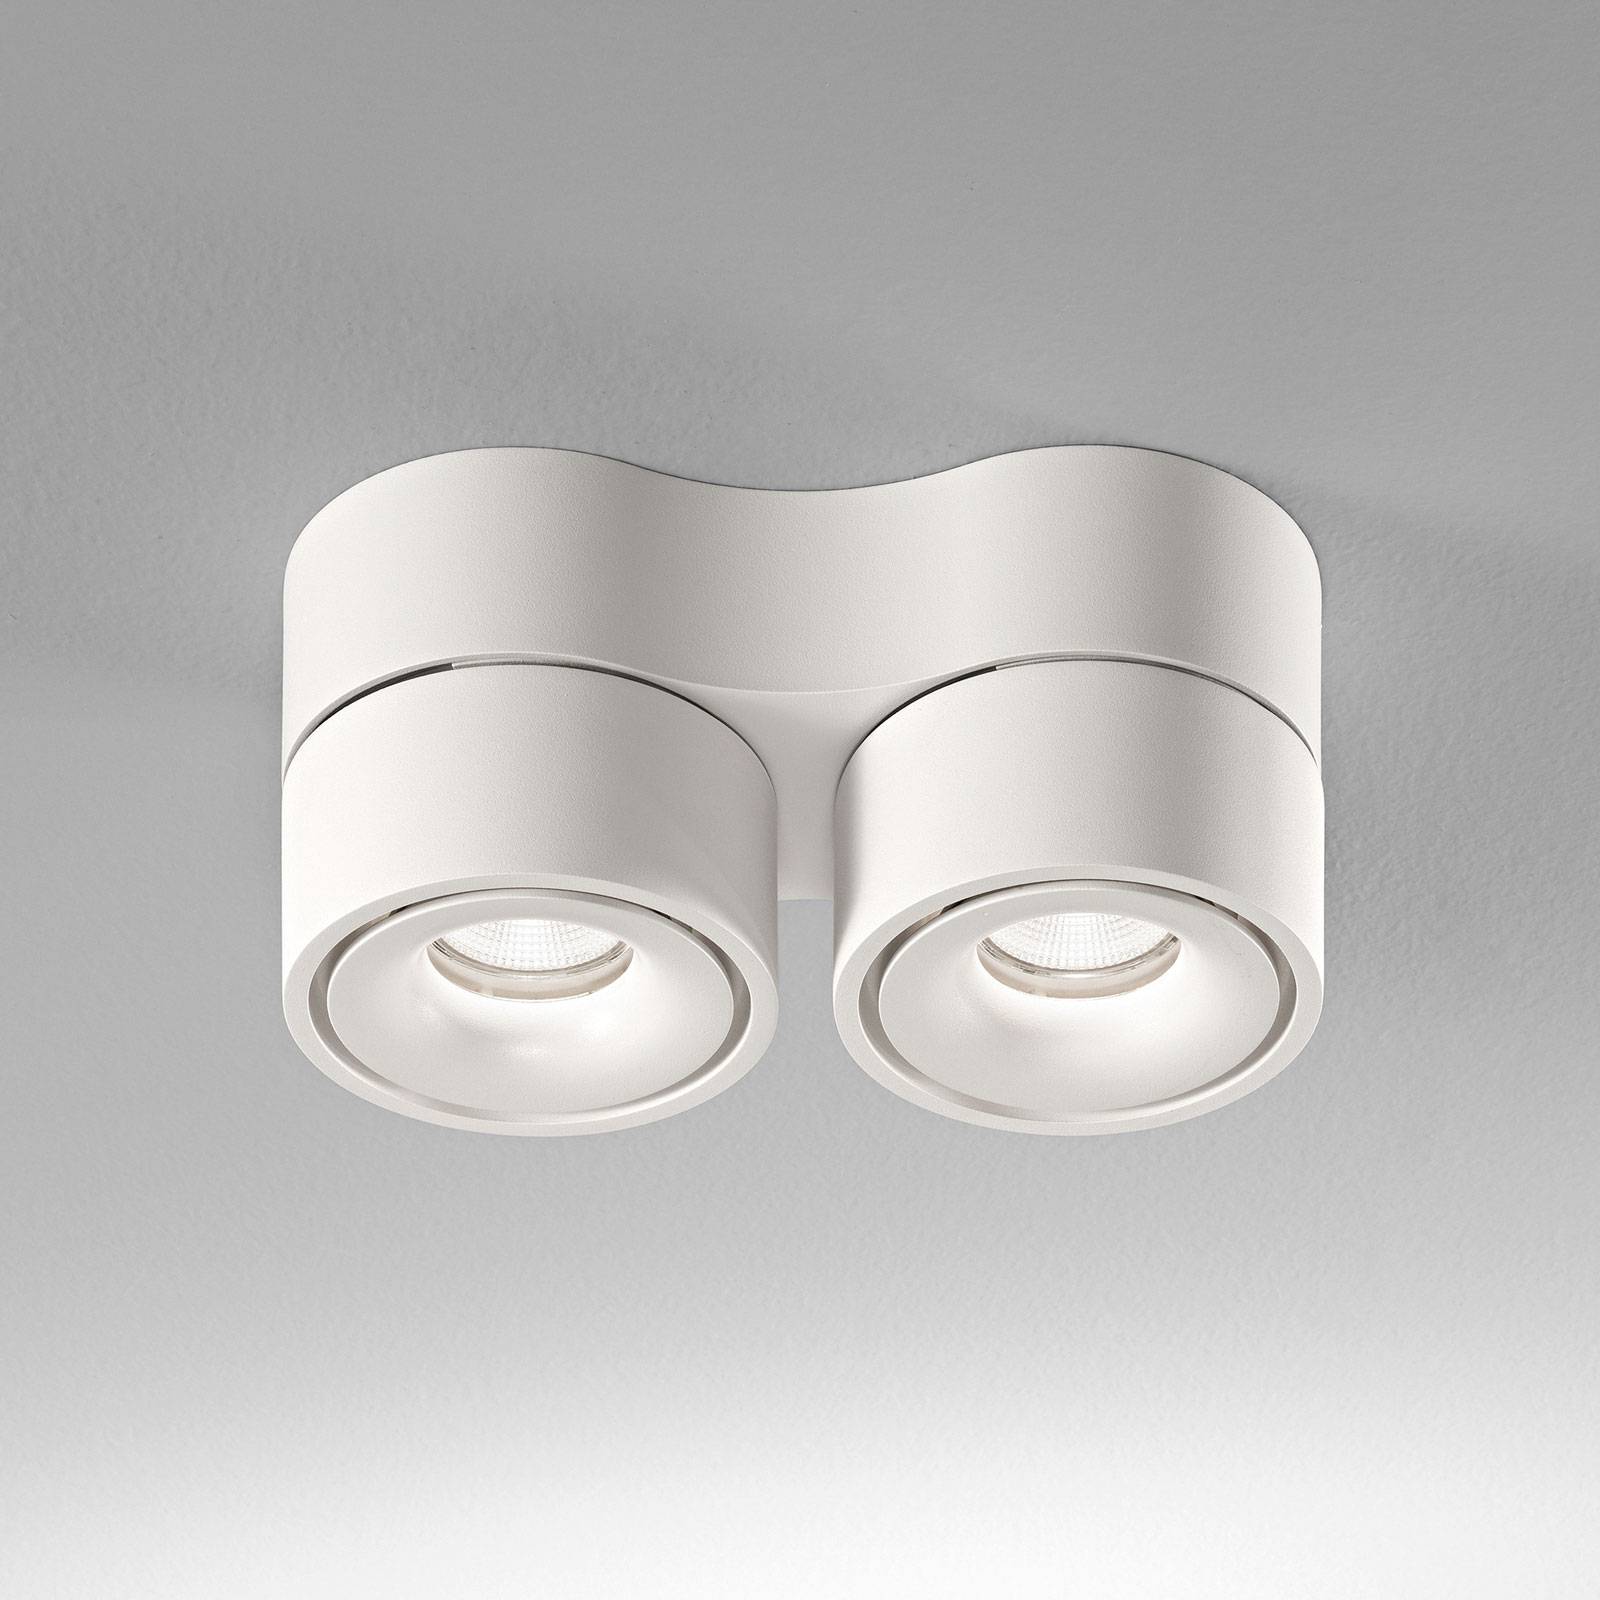 Image of Egger Clippo Duo spot plafond LED, blanc, 2 700 K 